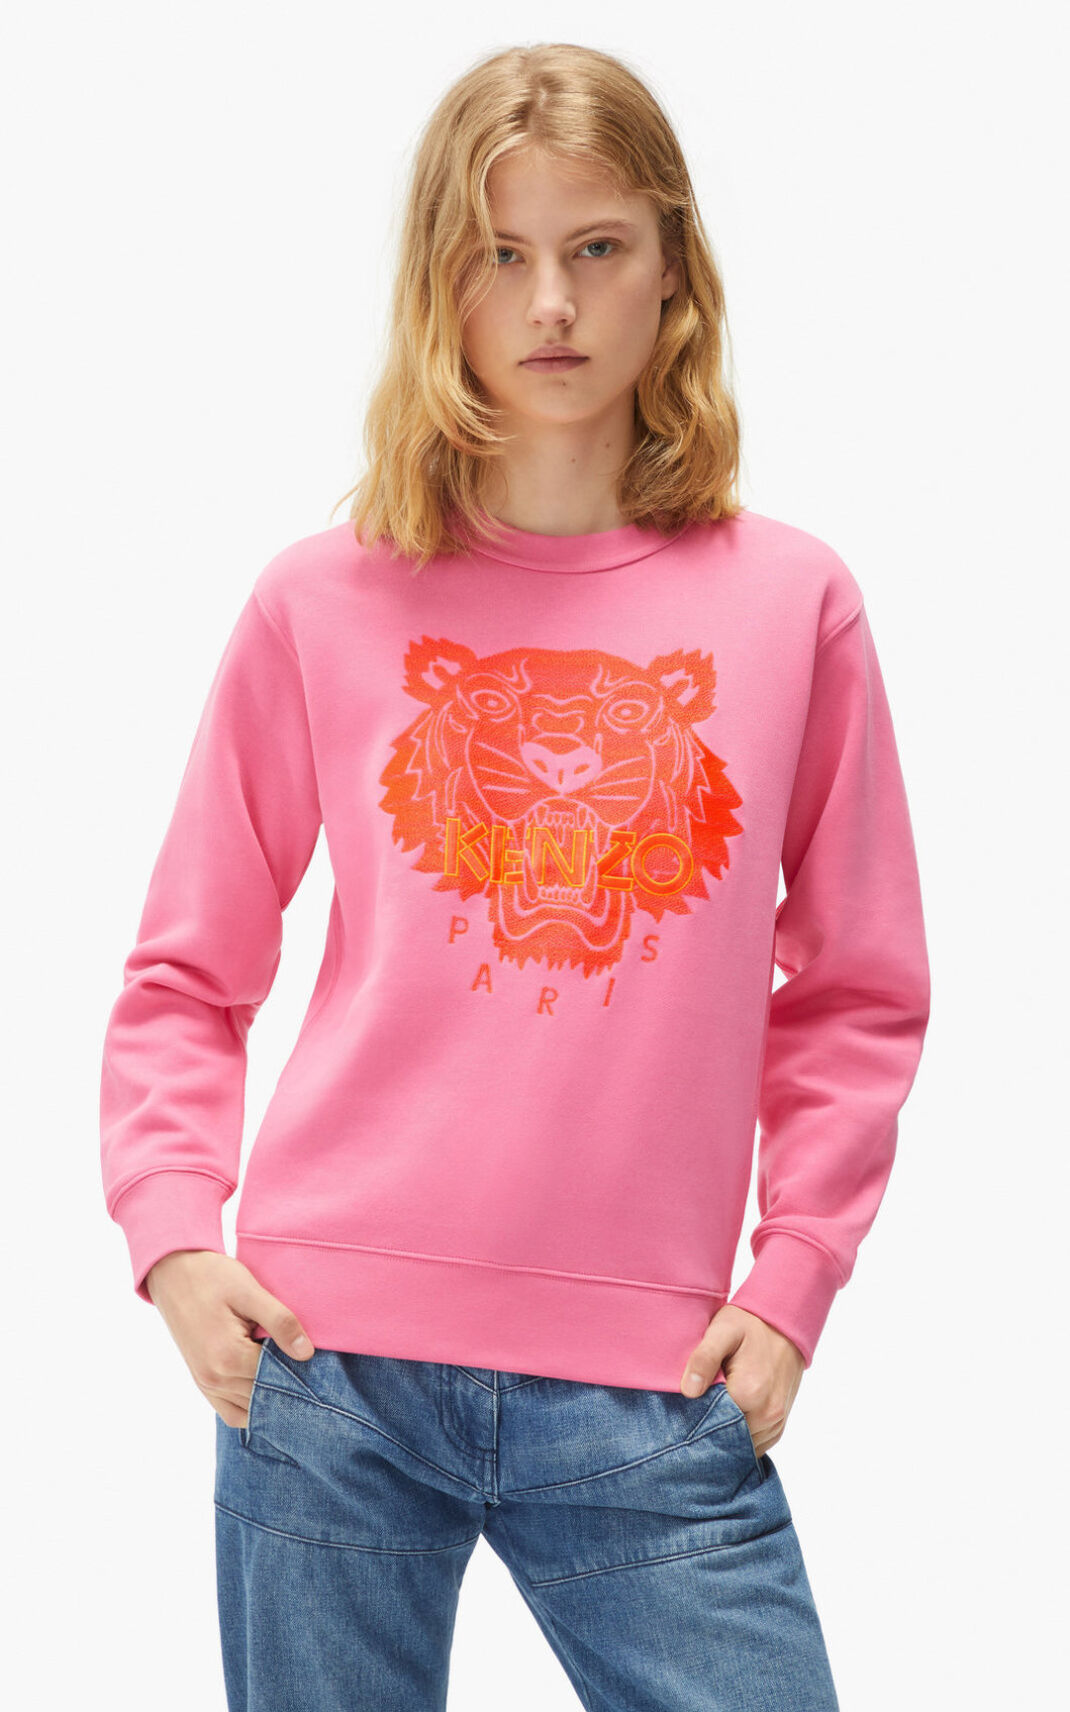 Kenzo Tiger Sweatshirt Pink For Womens 4325APYCT